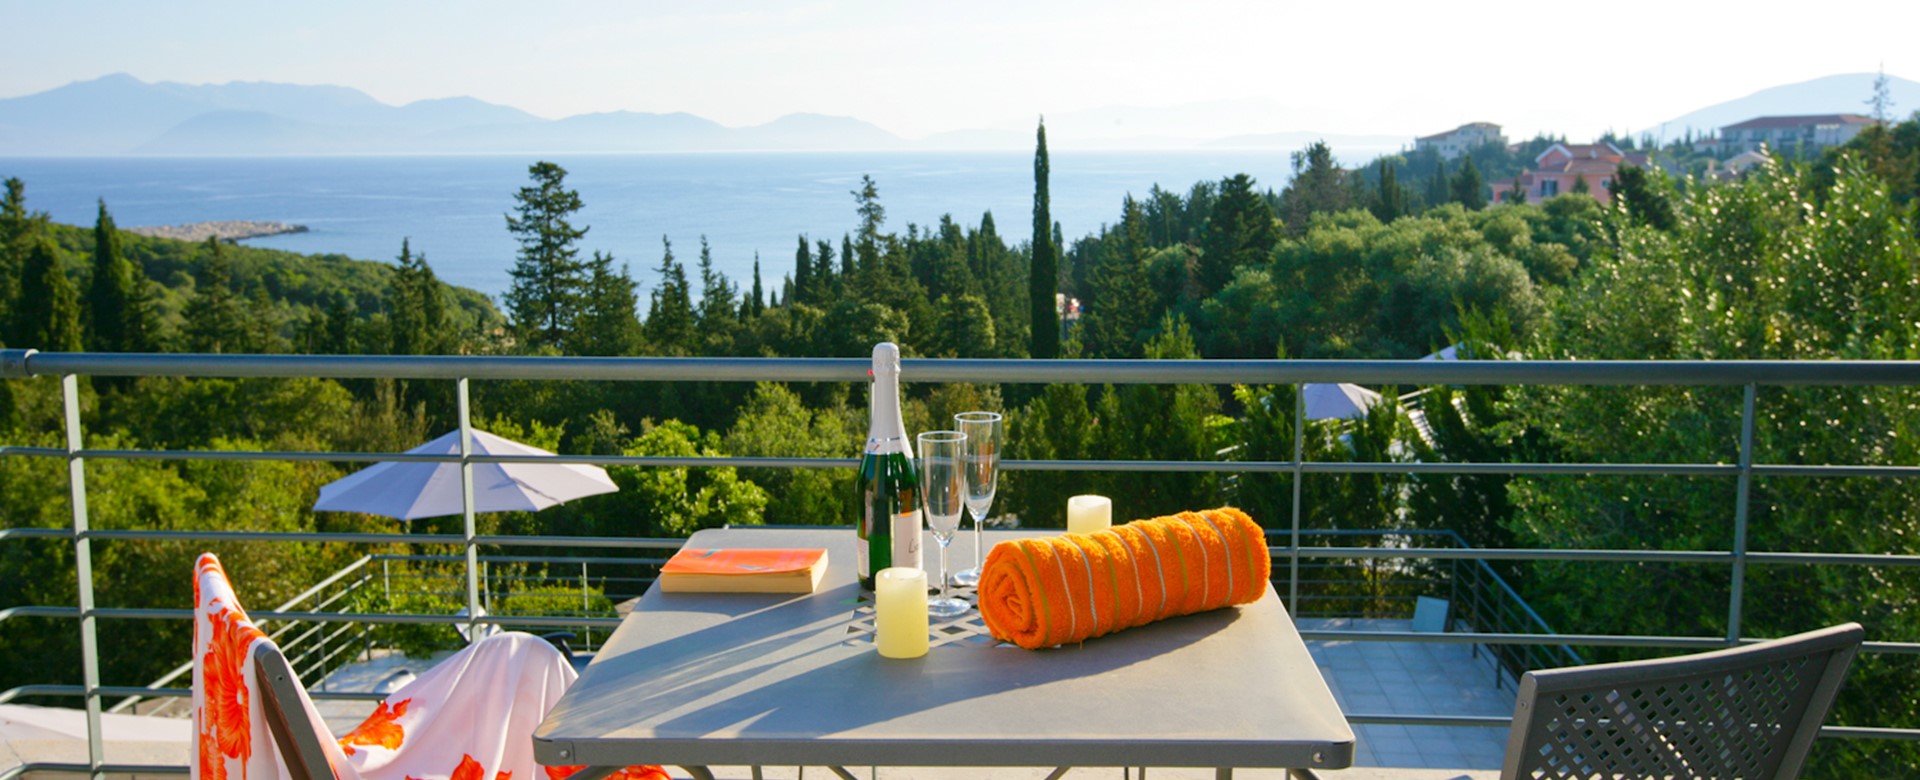 Beautiful views across pool towards the sea and mountains at Villa Roberto, Fiscardo, Kefalonia, Greek Islands